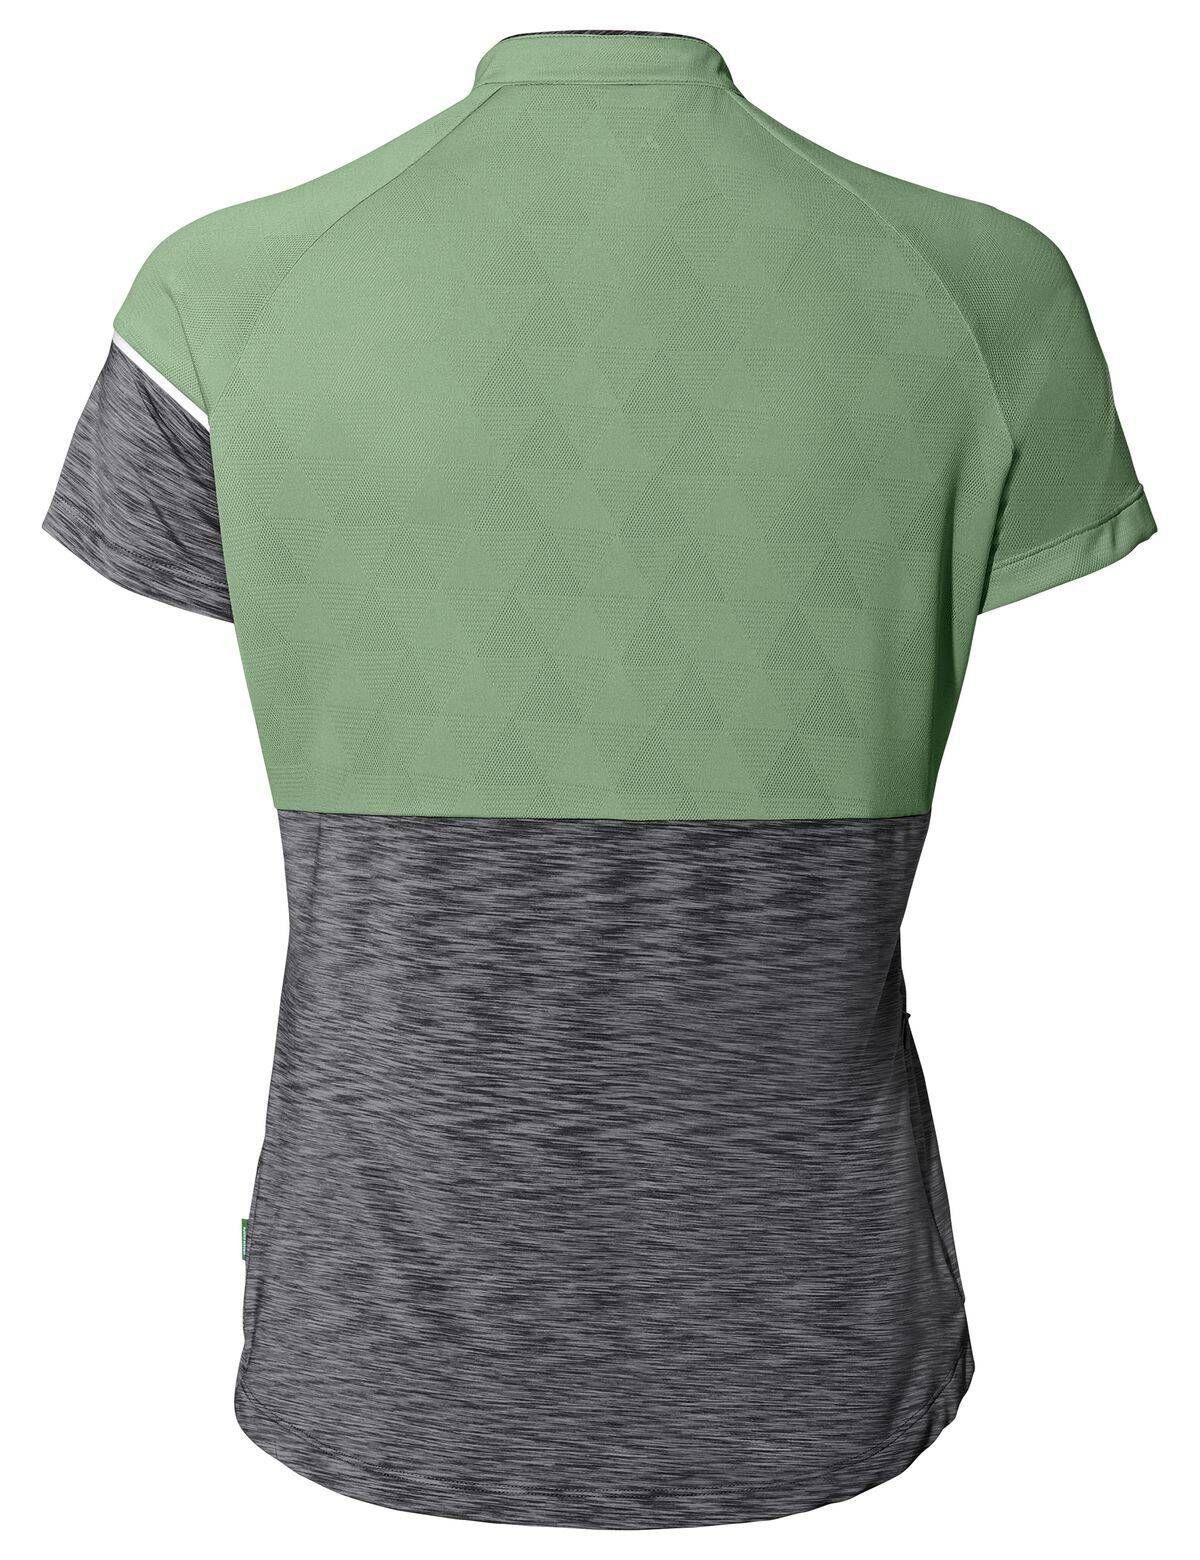 (400) grün Radtrikot VAUDE Damen "Altissimo" Shirt